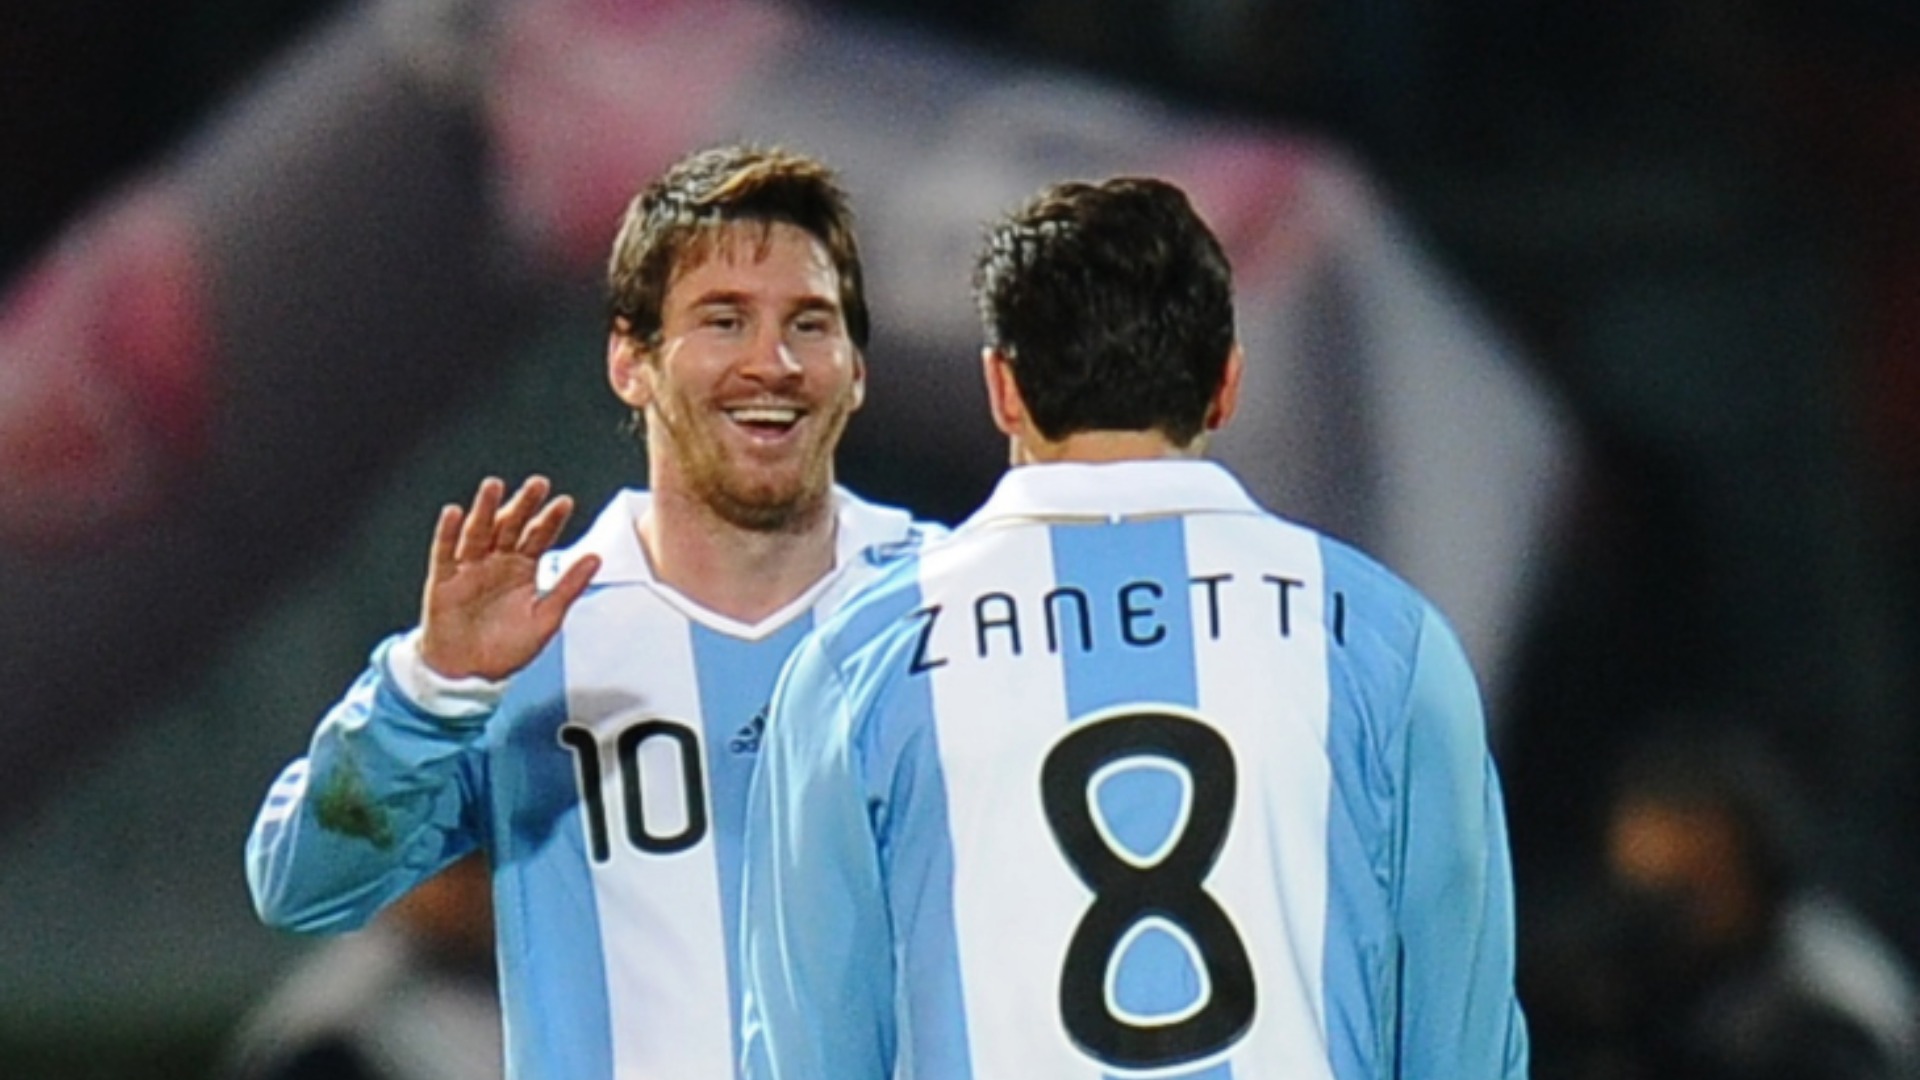 Zanetti, sobre el liderazgo de Messi: "Está al mismo nivel que Maradona"